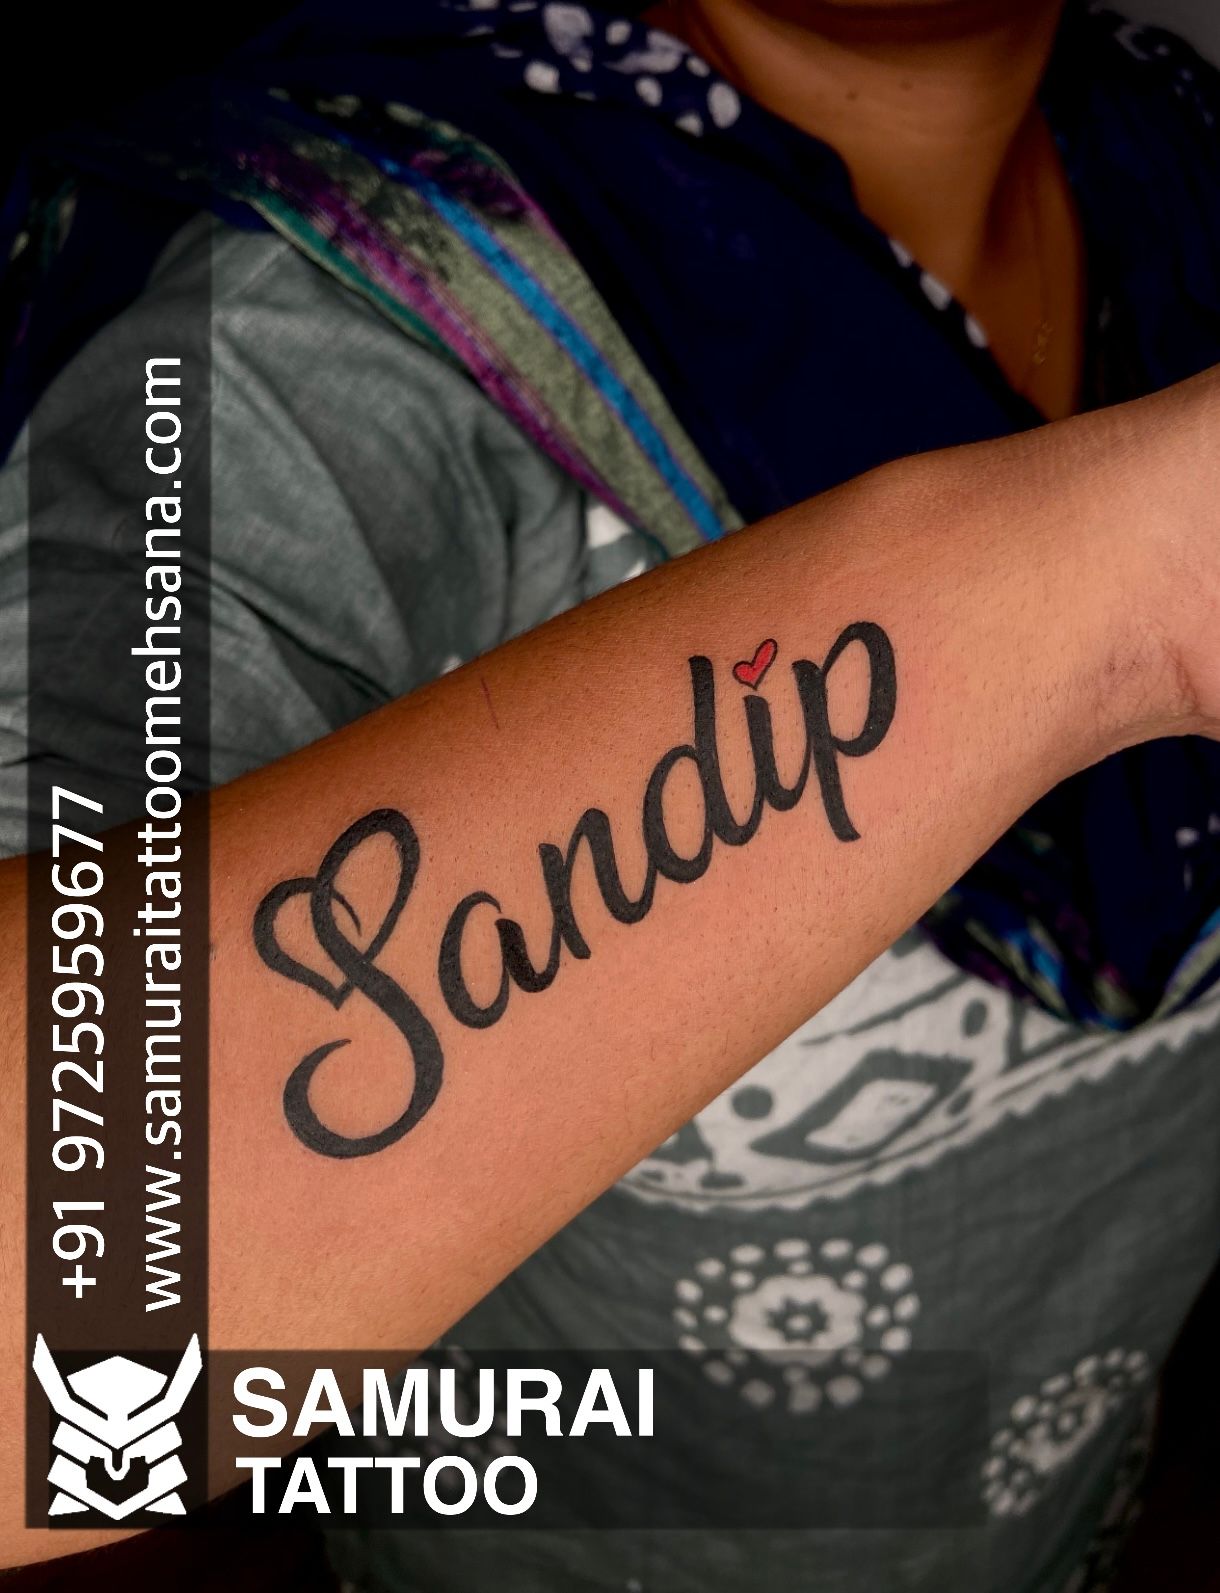 Tattoo uploaded by Vipul Chaudhary • Sikotar maa tattoo |Maa sikotar tattoo  |sikotar maa nu tattoo |sikotar tattoo • Tattoodo